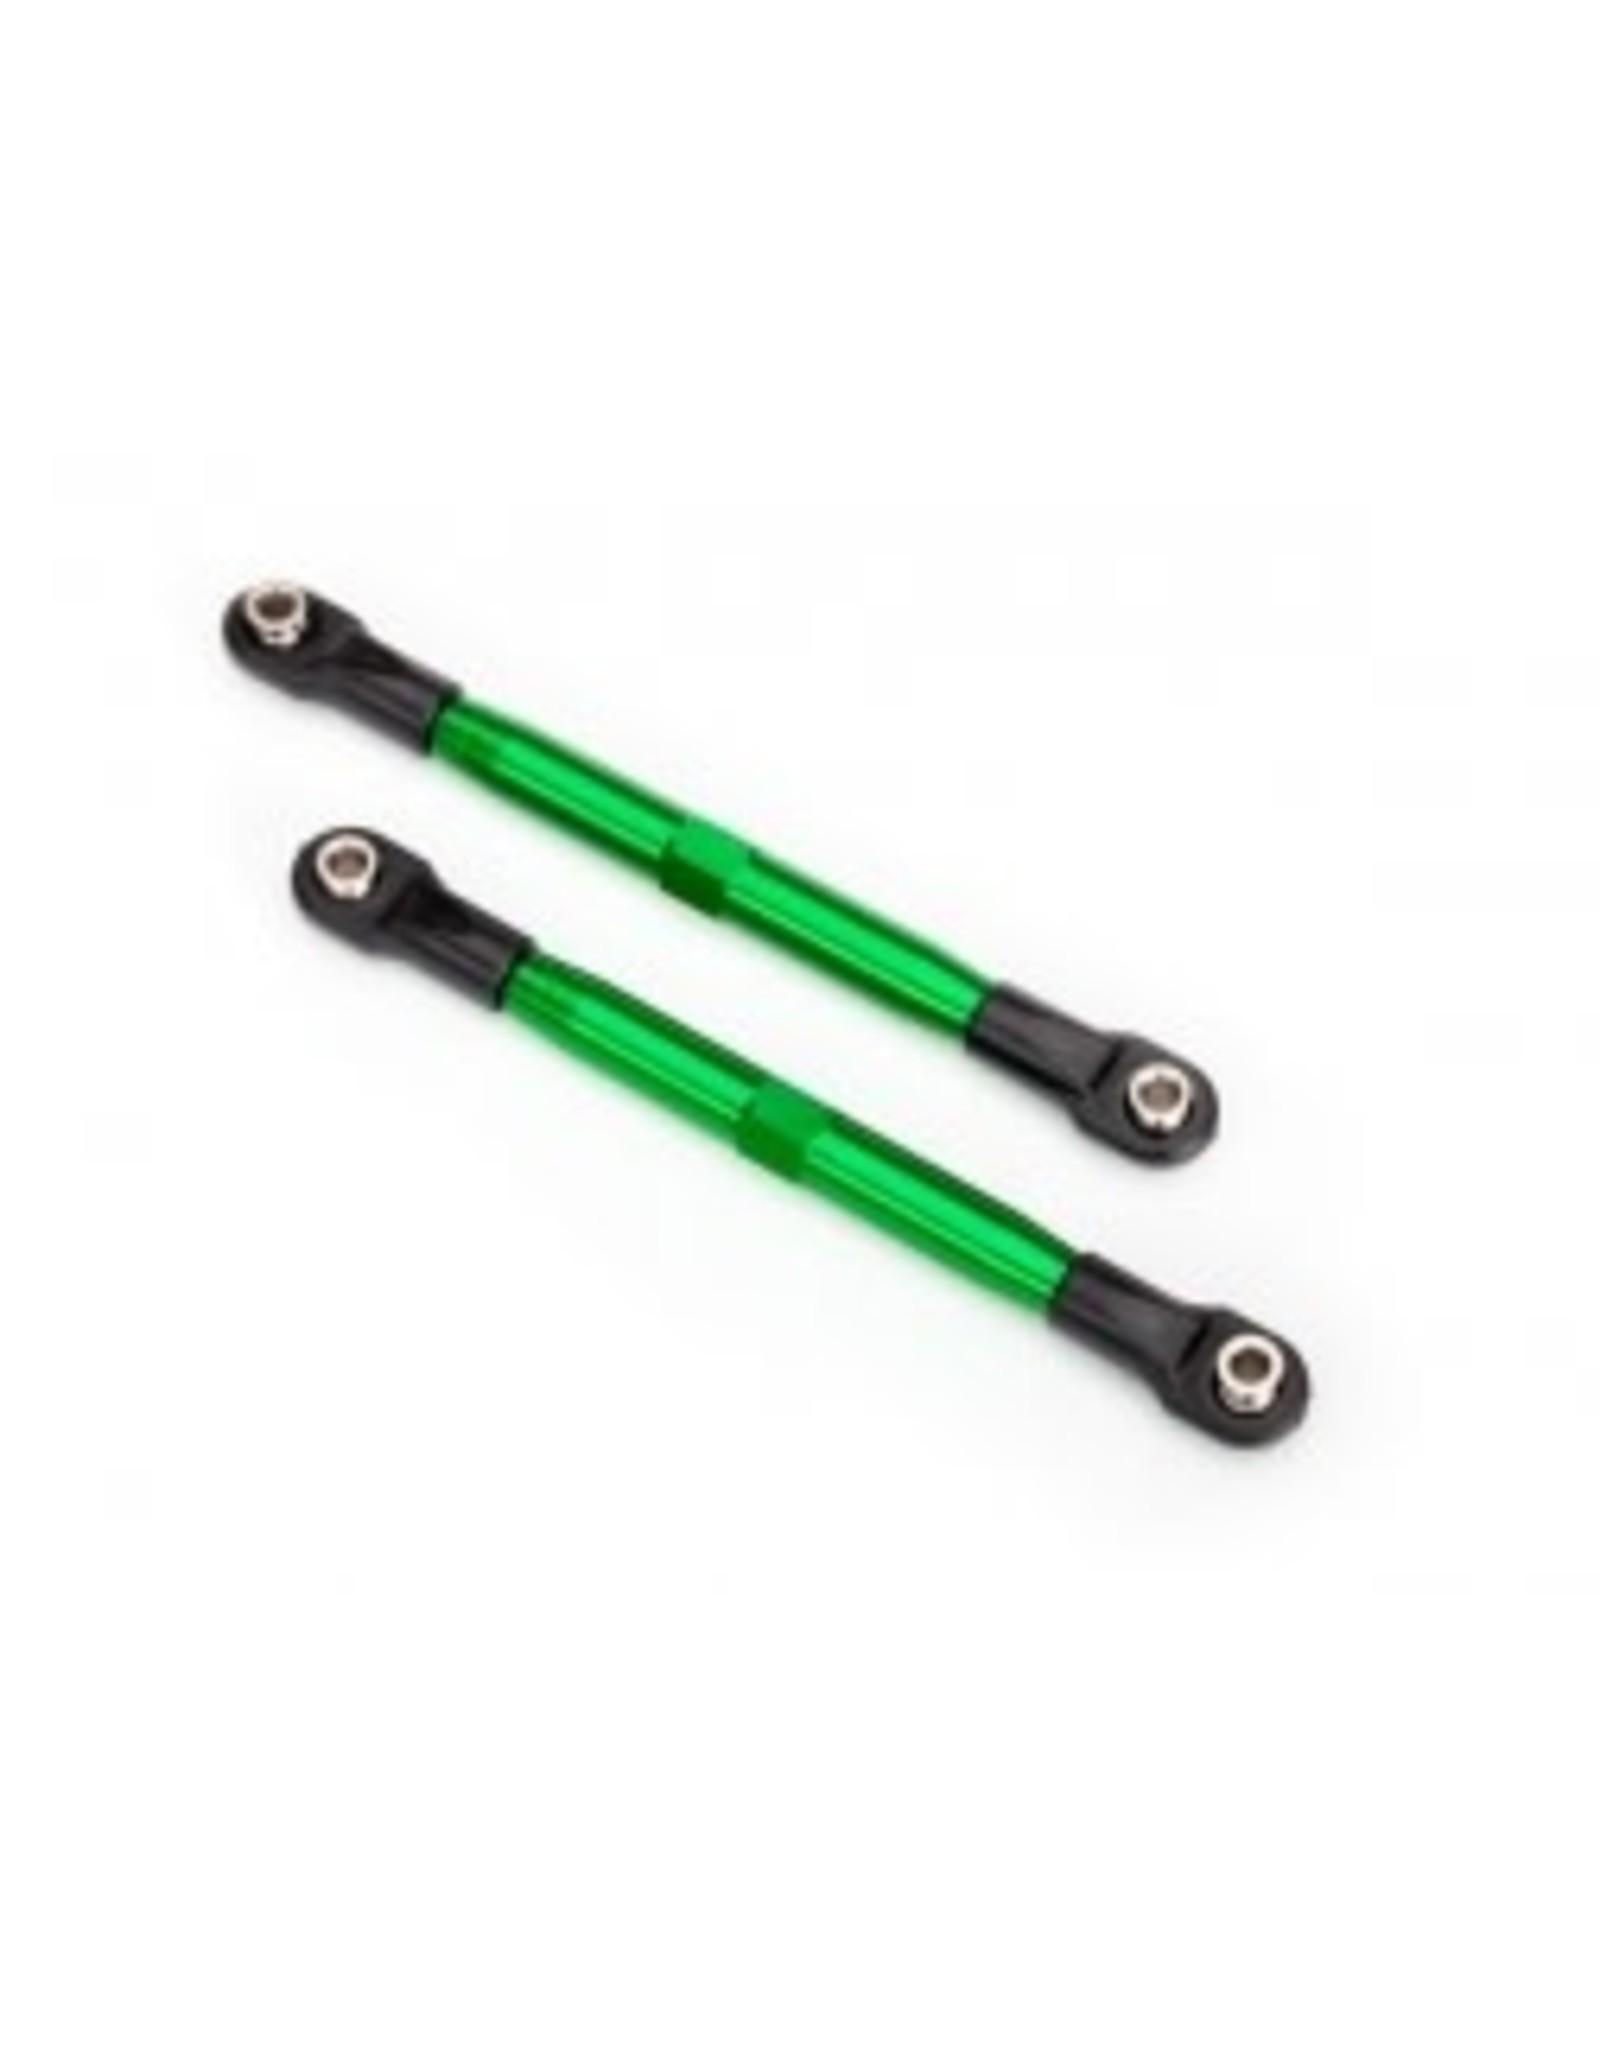 Traxxas [Toe links (TUBES green-anodized, 7075-T6 aluminum, stronger than titanium) (87mm) (2)/ rod ends (4)/ aluminum wrench (1)] Toe links (TUBES green-anodized, 7075-T6 aluminum, stronger than titanium) (87mm) (2)/ rod ends (4)/ aluminum wrench (1)